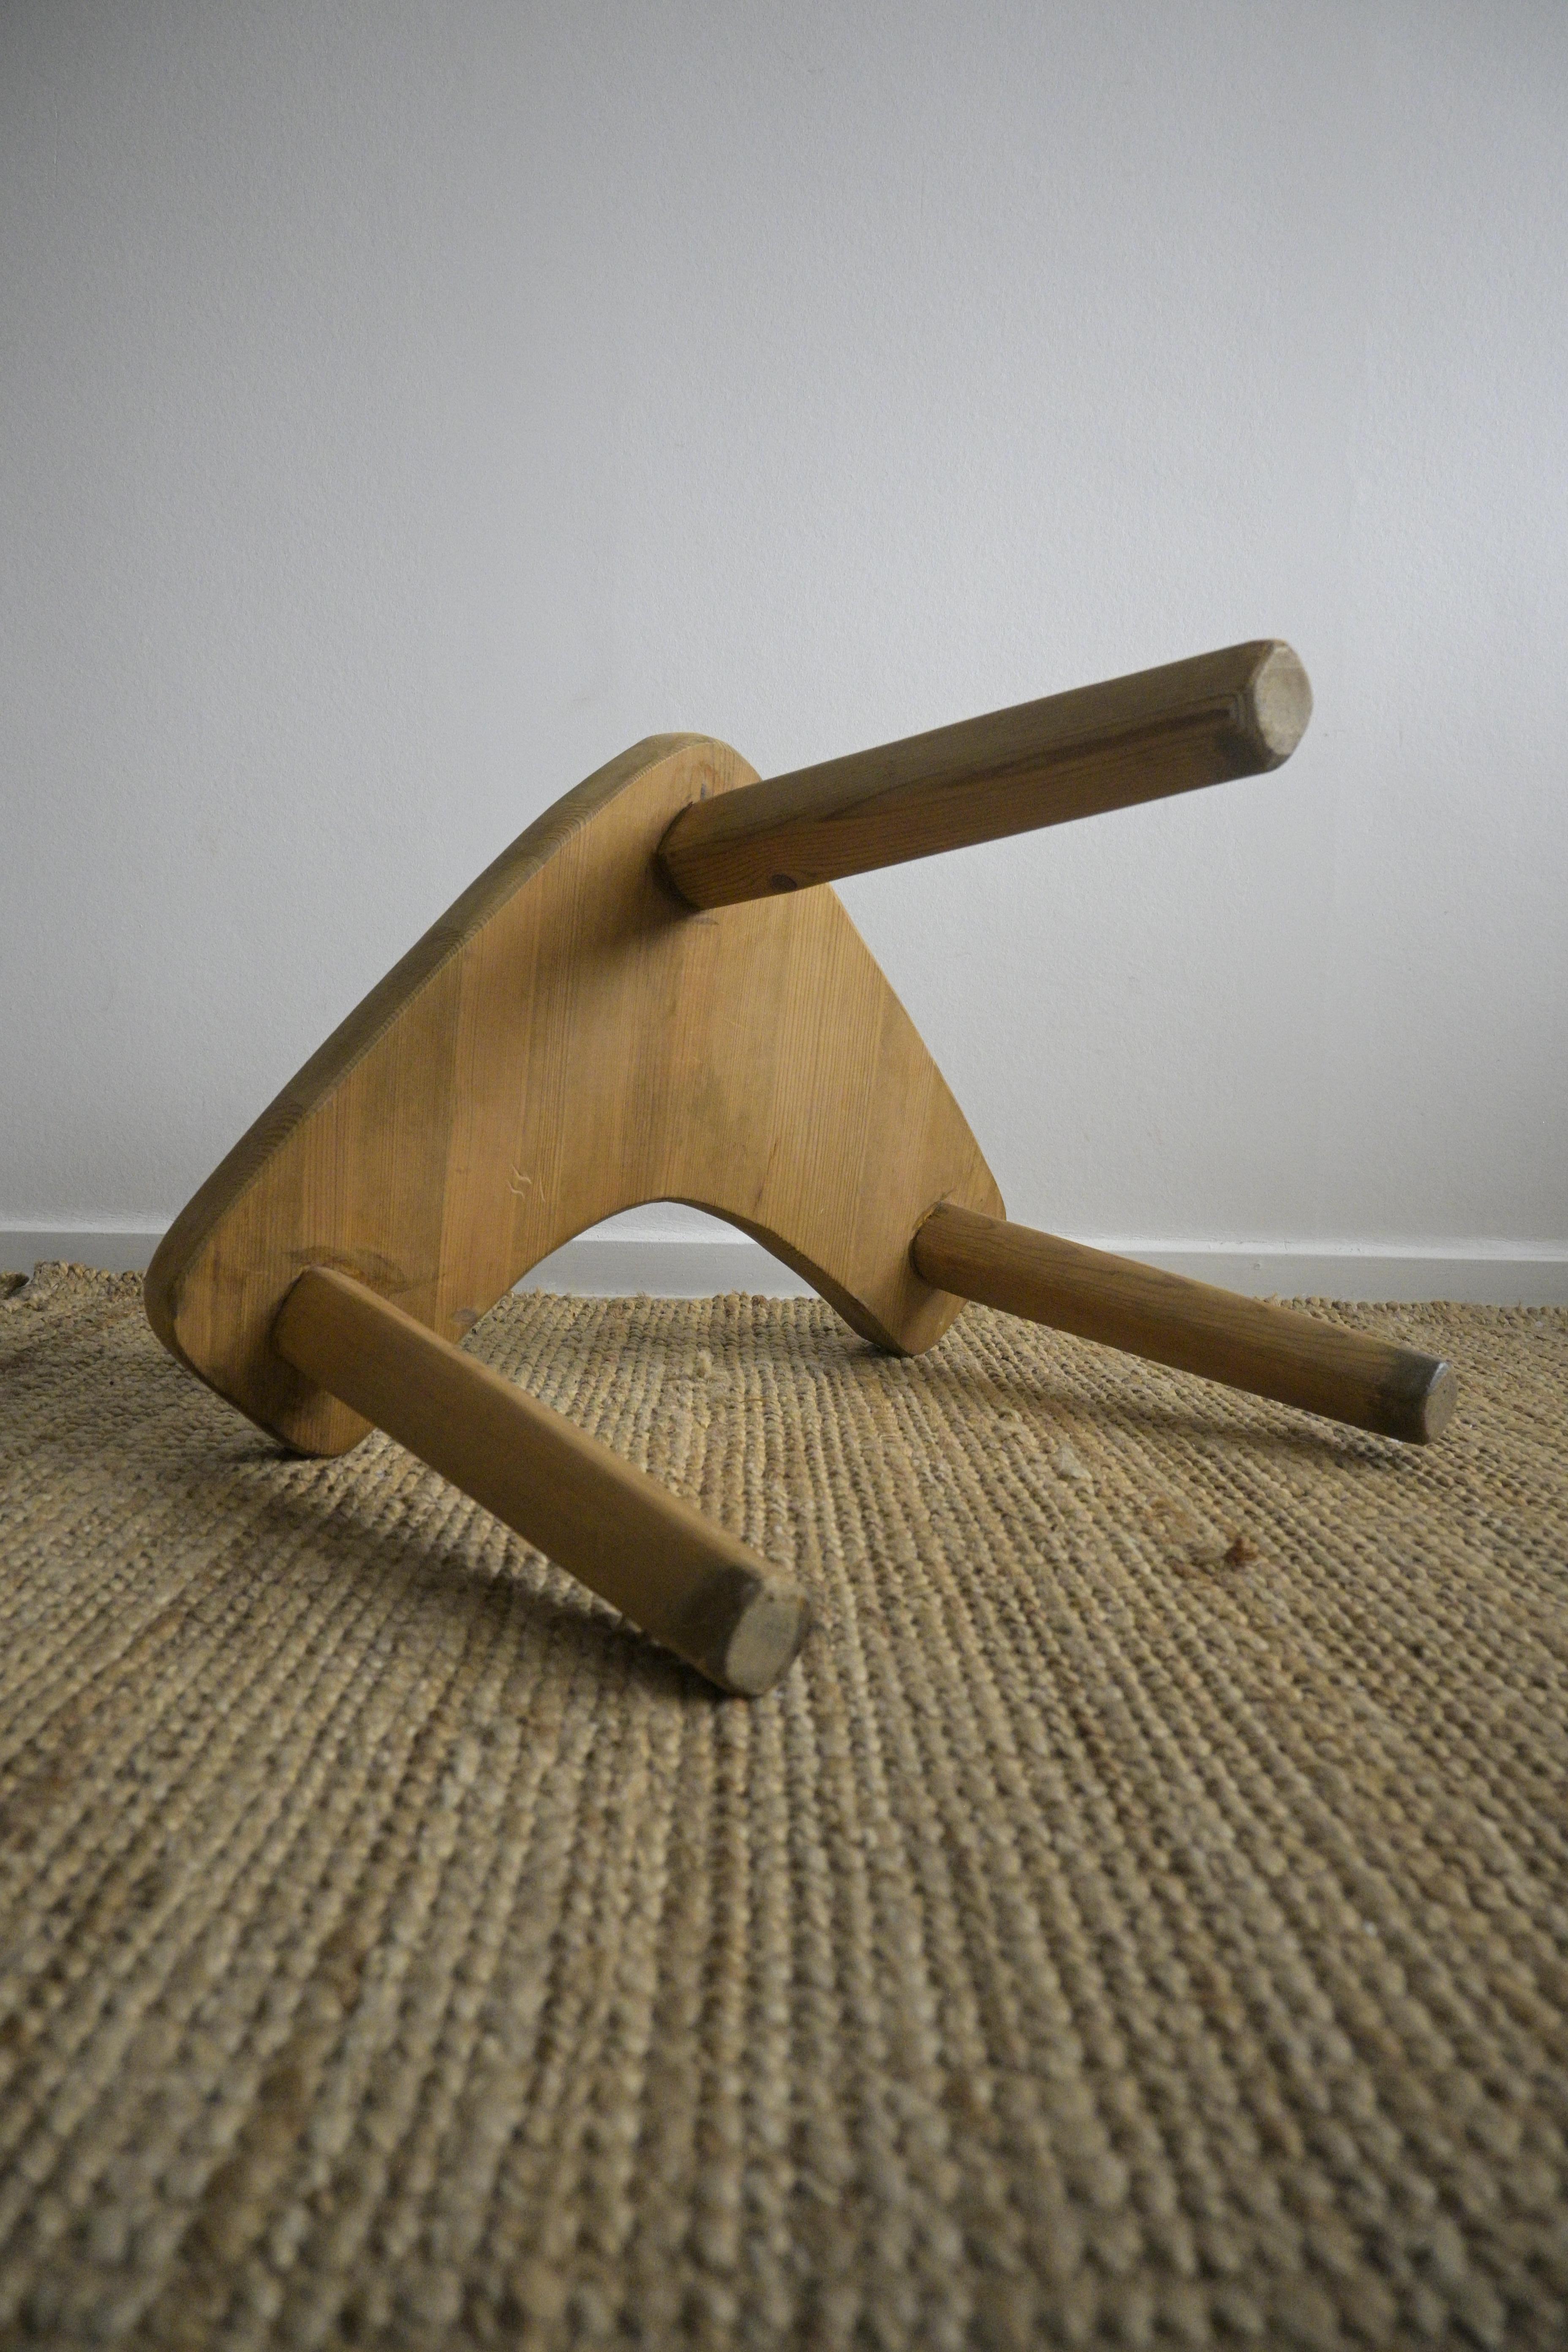 Unsymmetric Pine Stool or Side Table by Stig Sandqvist, Vemdalen, Sweden 1950s For Sale 4